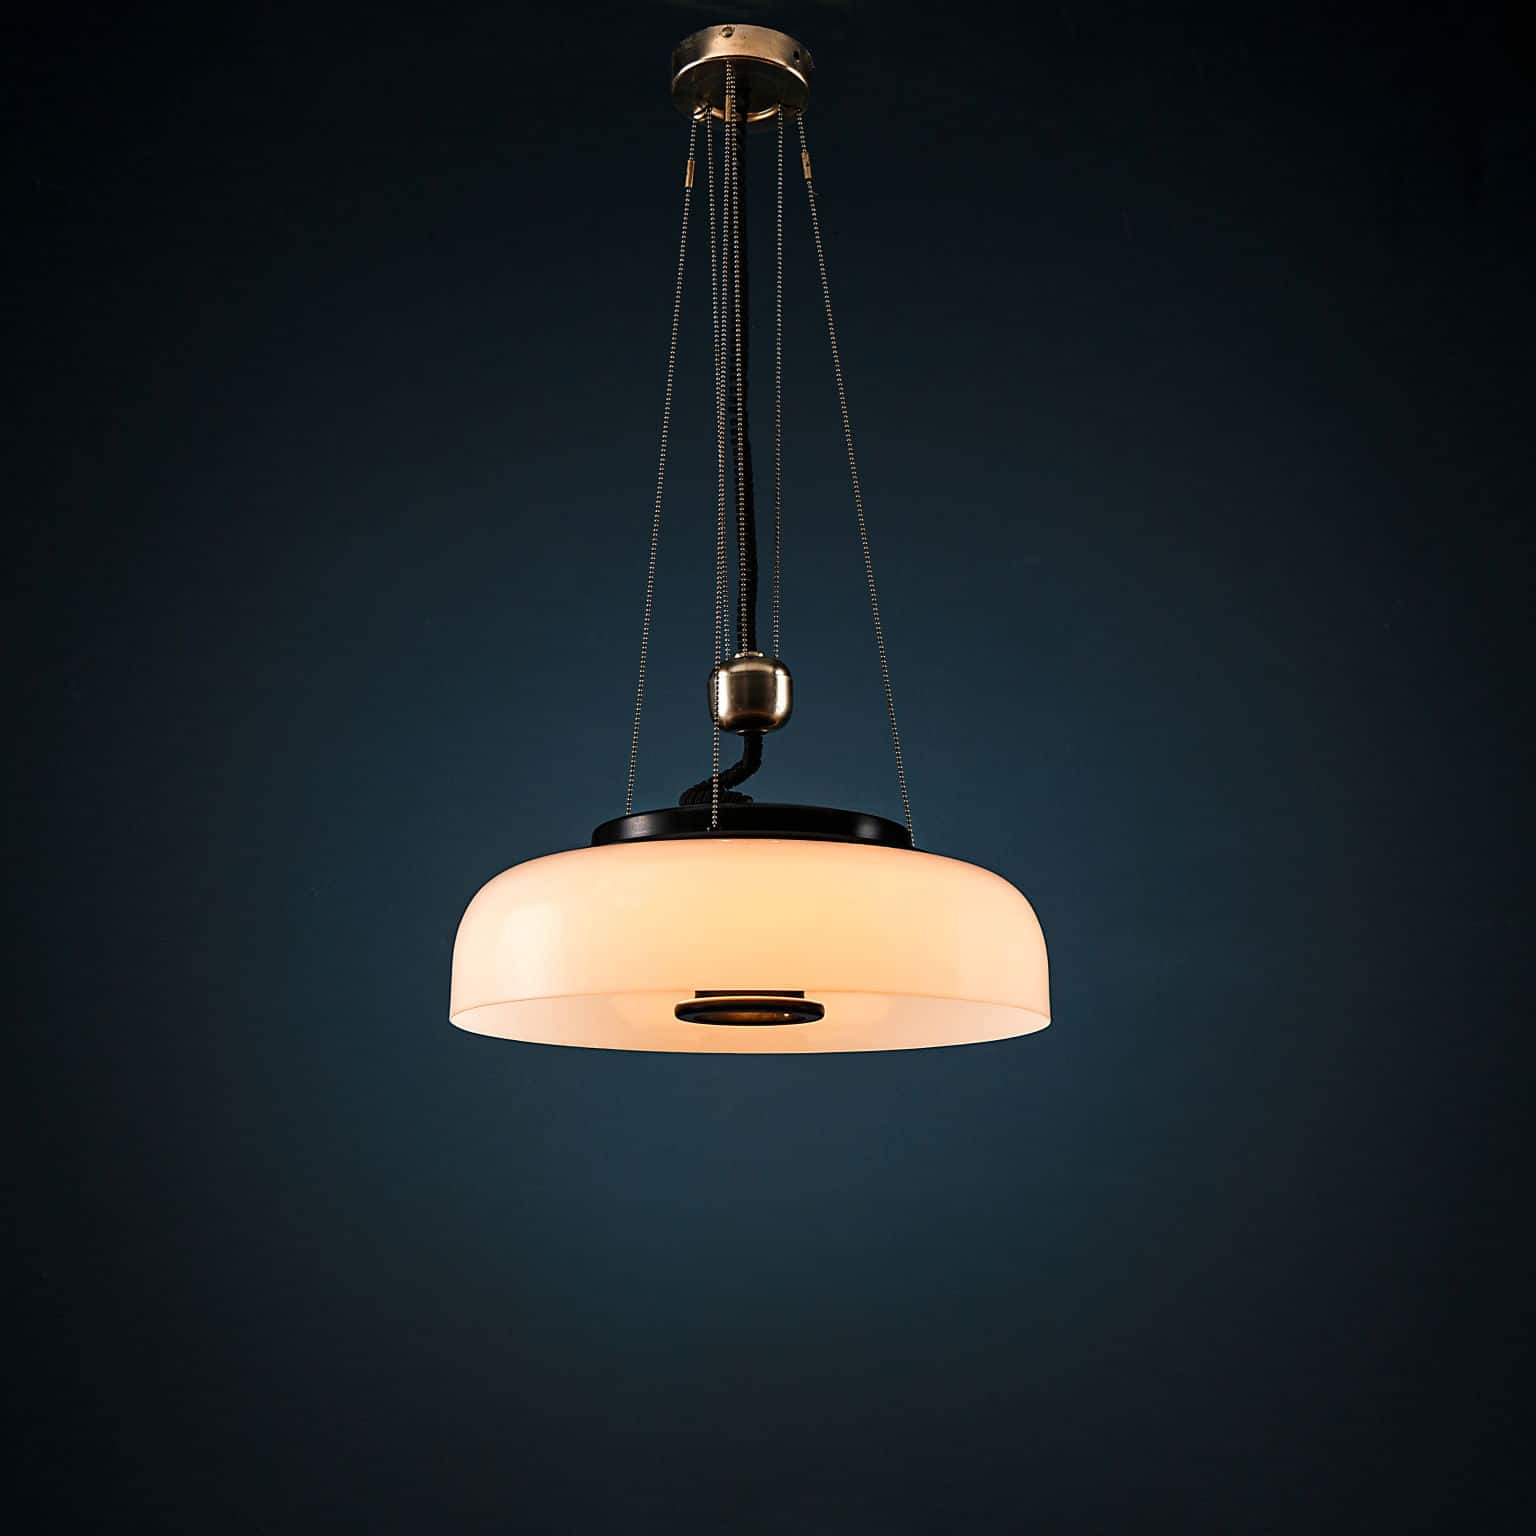 Lamp “2121” by Gino Safatti for Arteluce Lighting